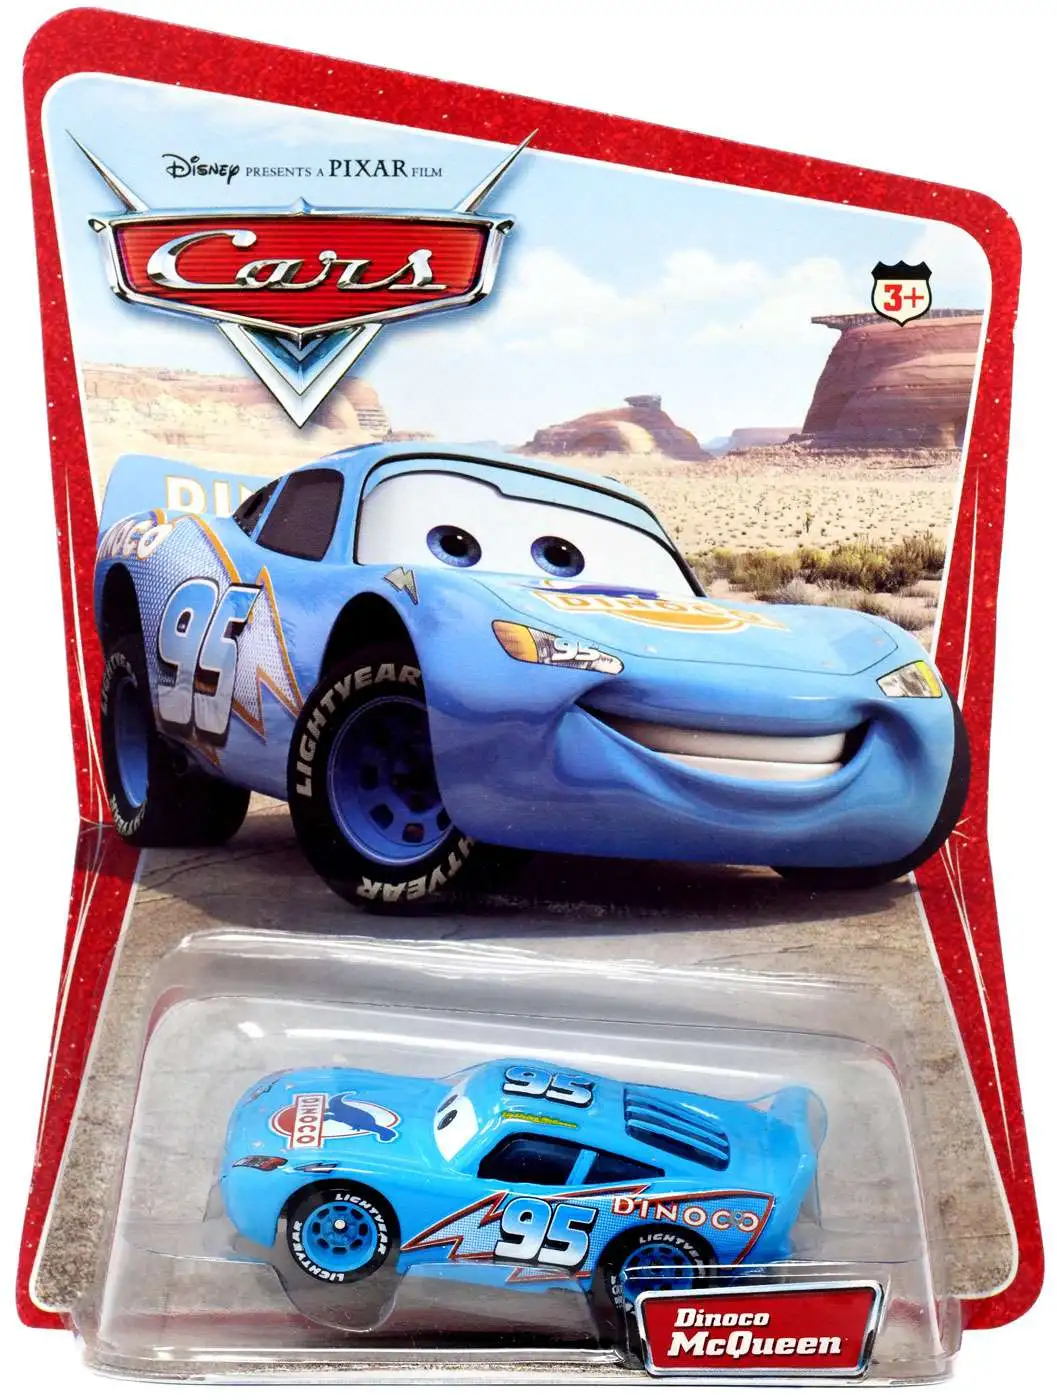 Disney Cars 1 Series - The original Lightning McQueen - Global